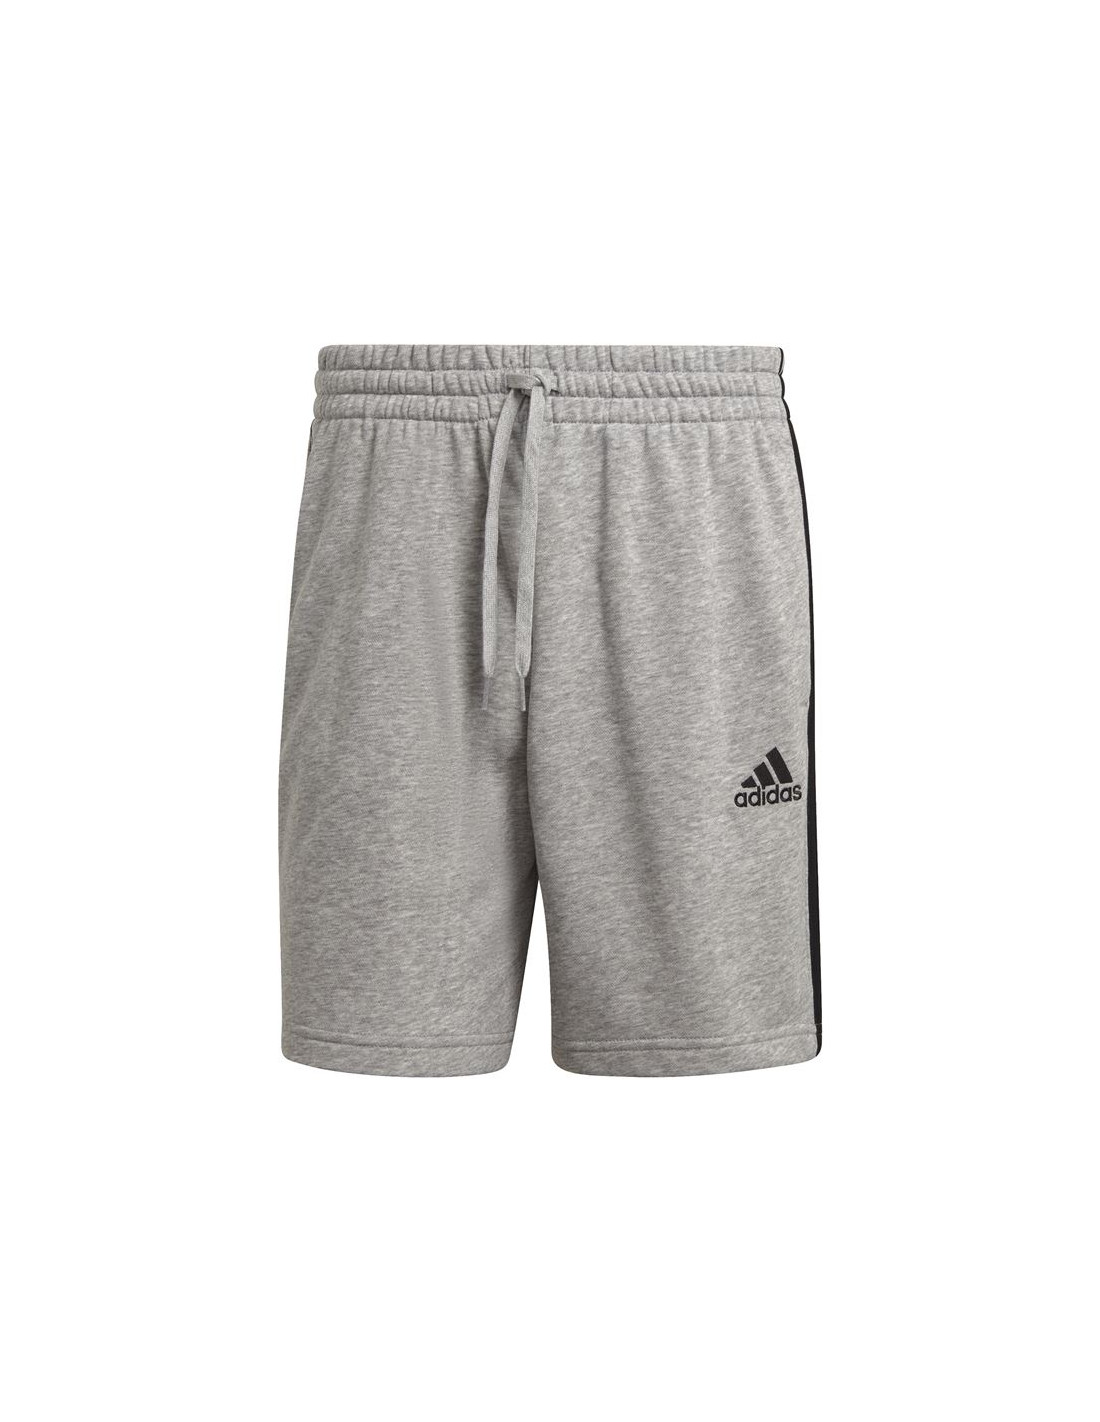 Pantalones cortos adidas essentials french terry 3 bandas m grey/